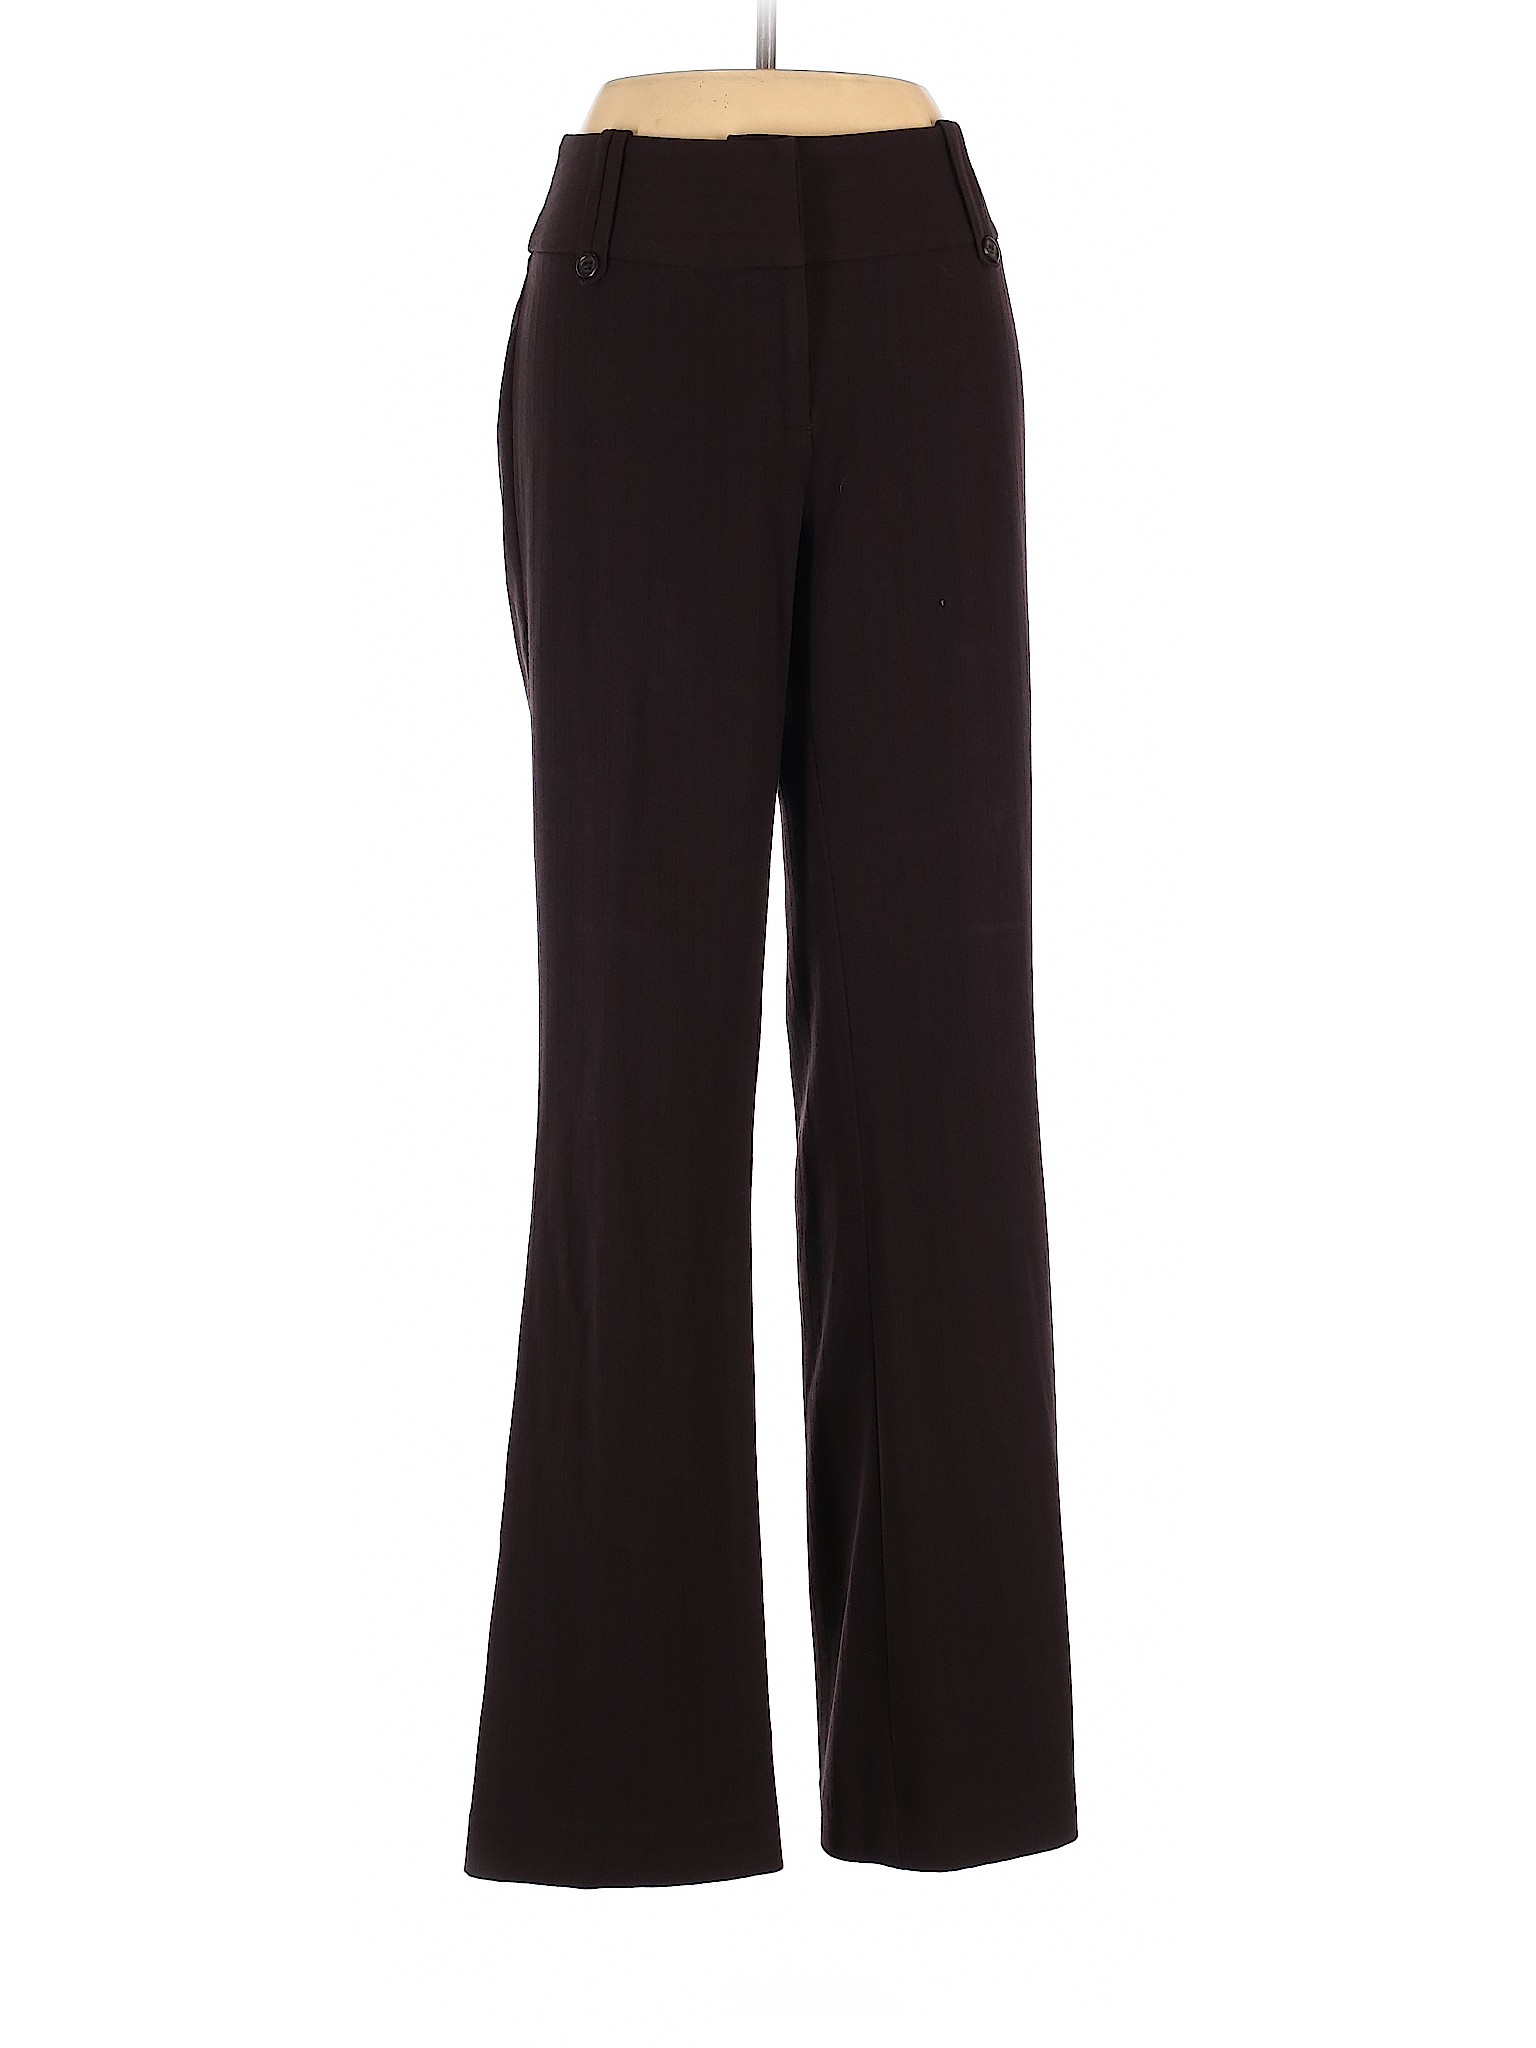 INC International Concepts Women Black Dress Pants 8 | eBay